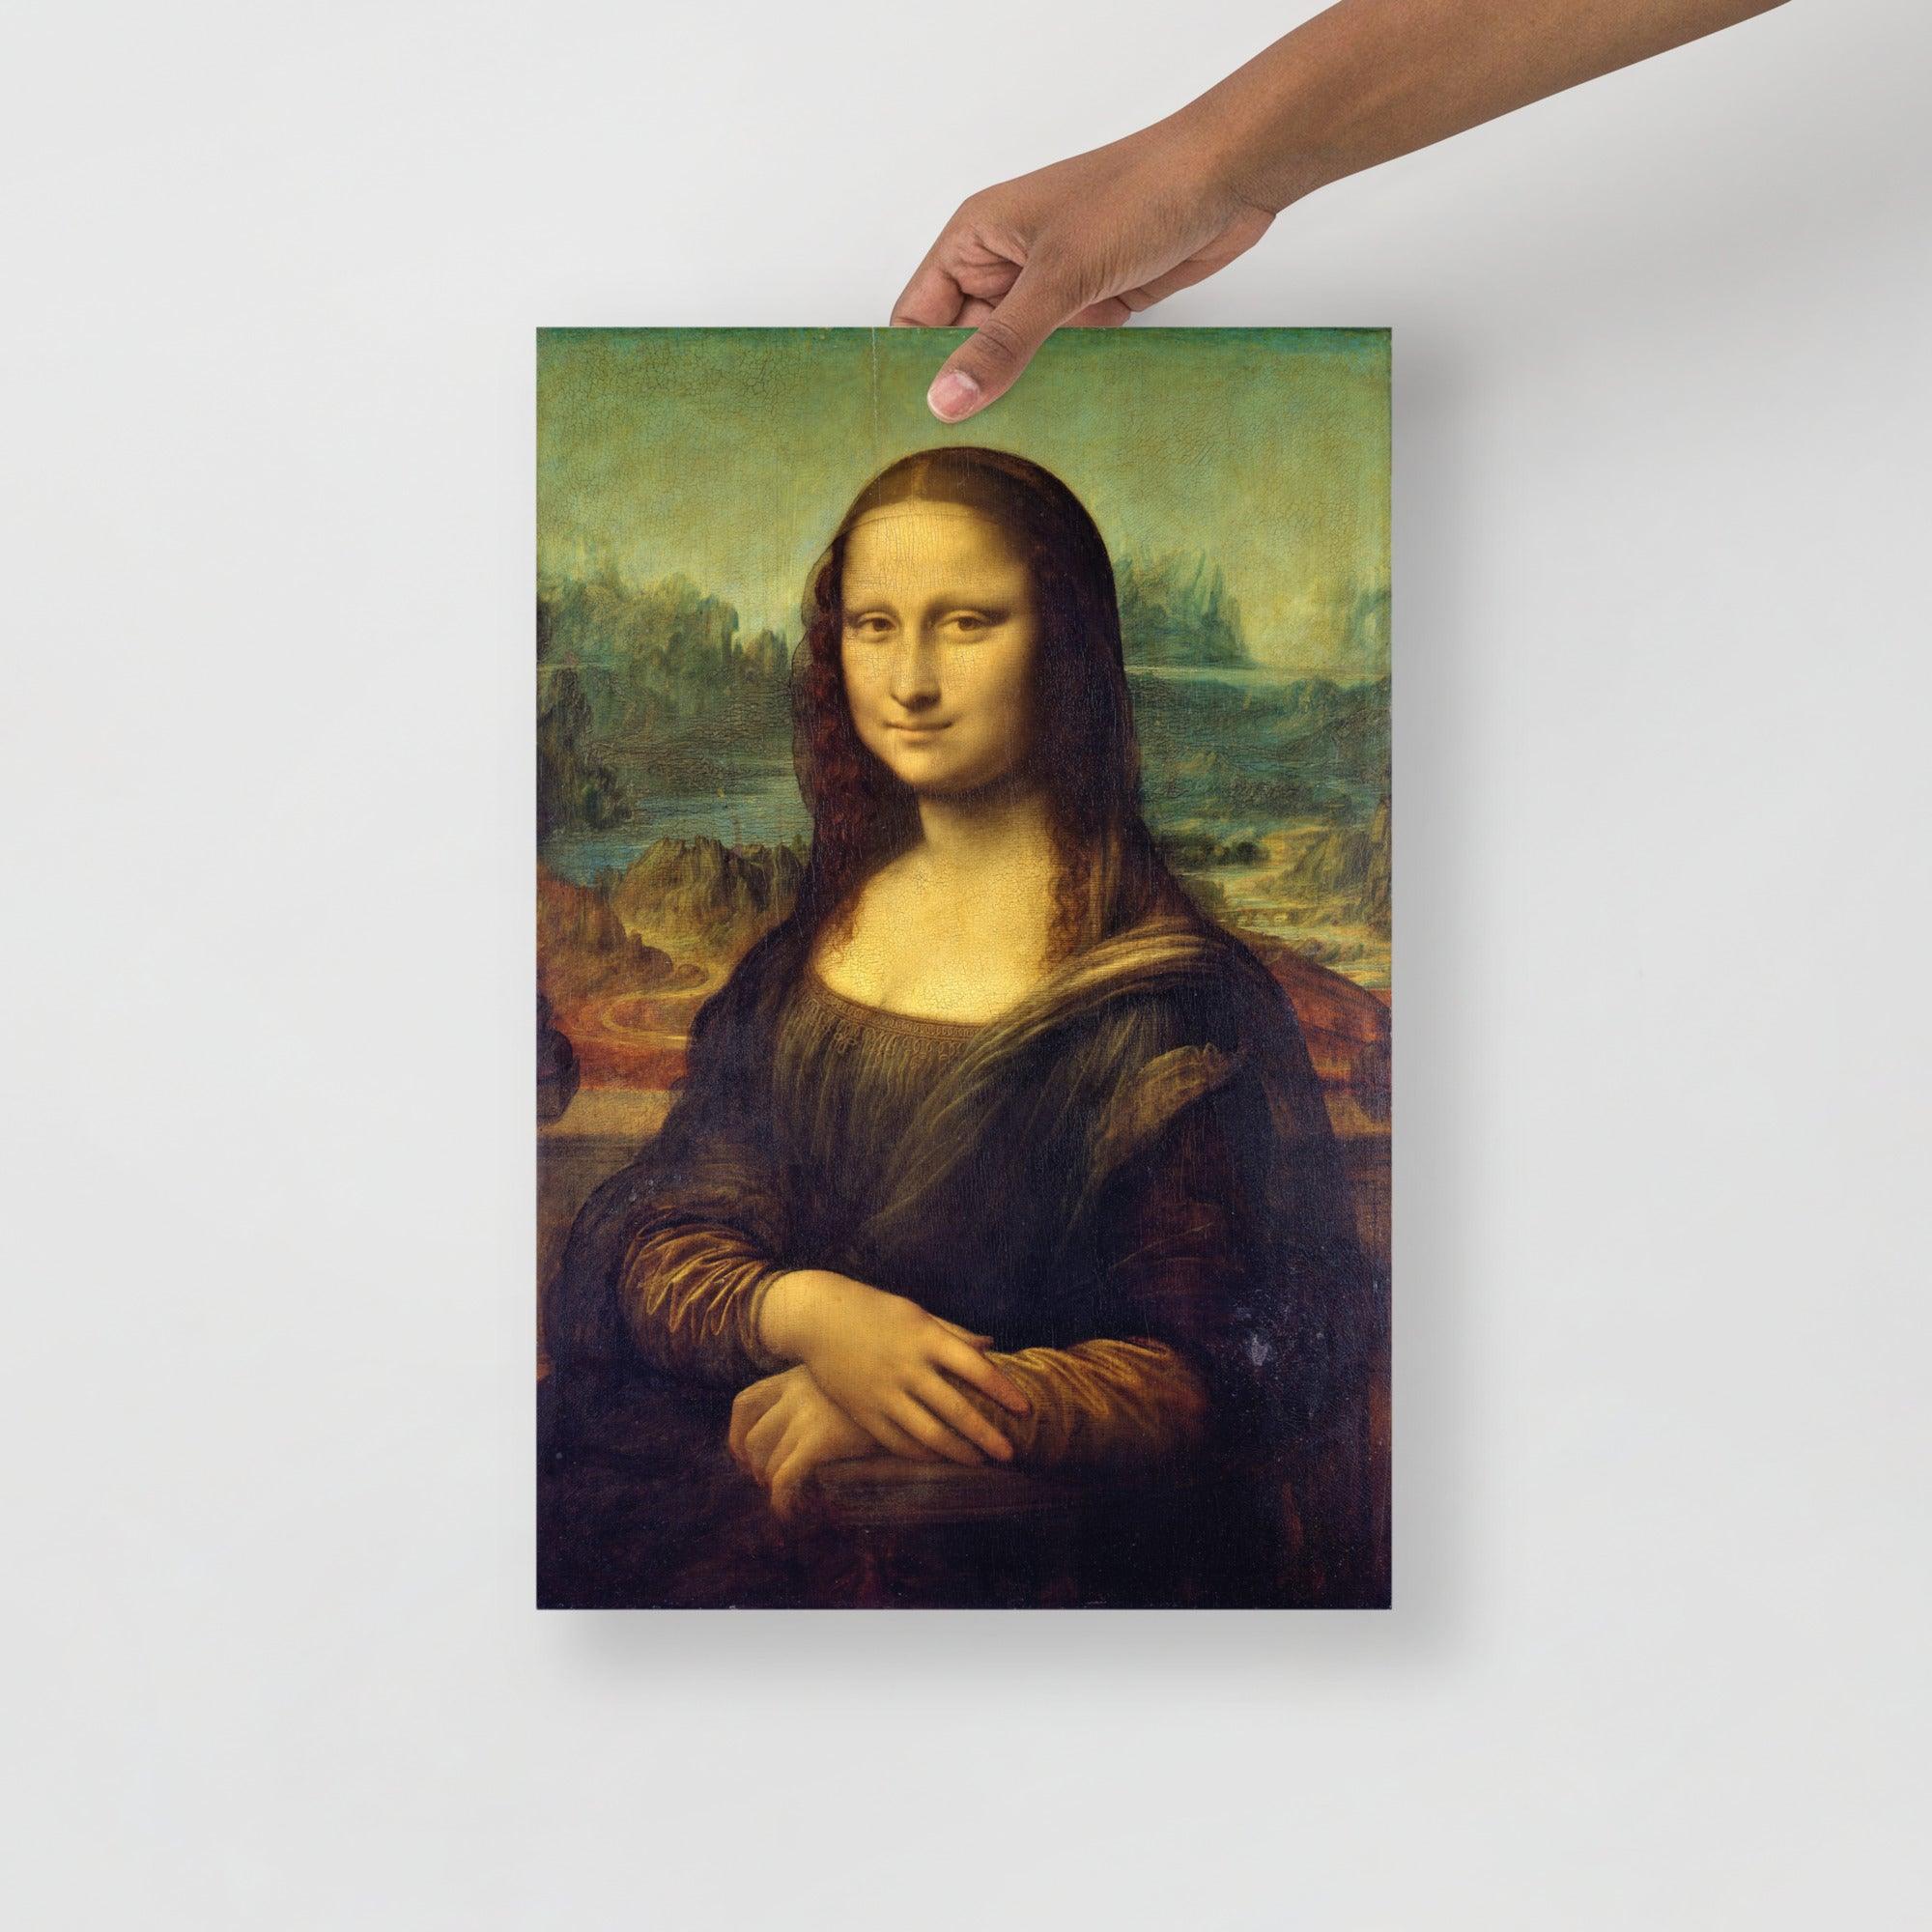 A Mona Lisa by Leonardo Da Vinci poster on a plain backdrop in size 12x18”.